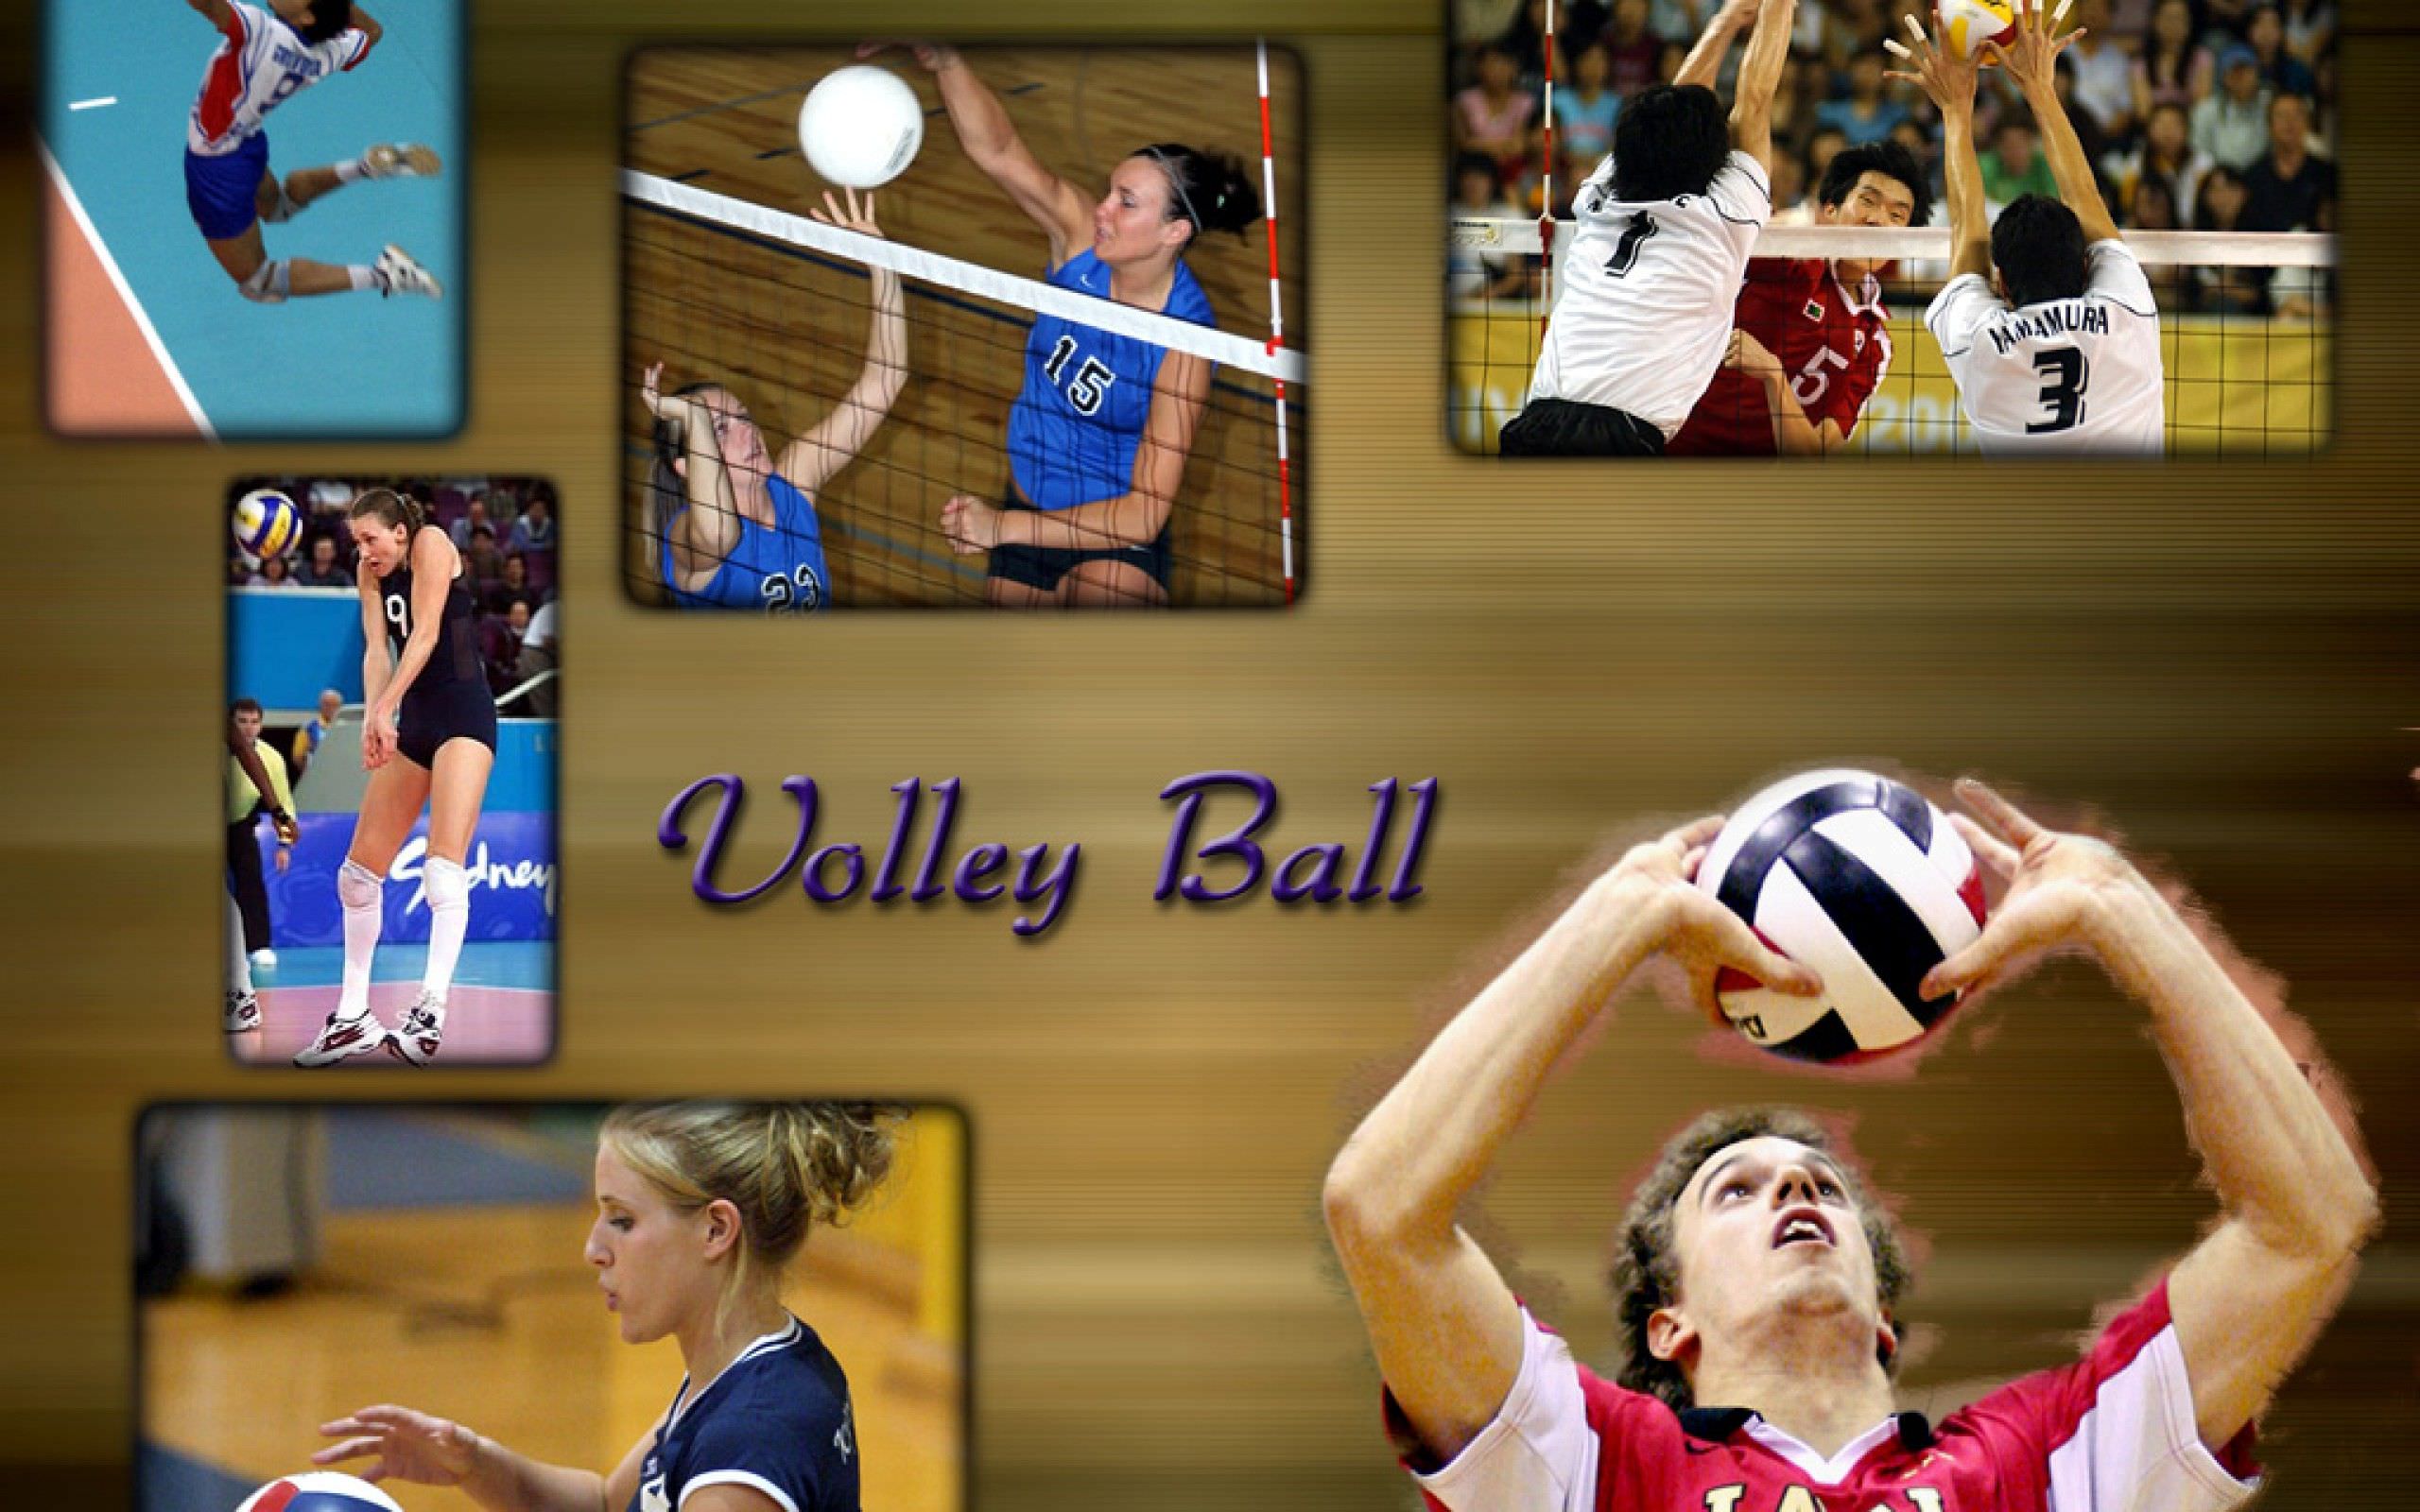 volleyball wallpaper hd,volleyball,volleyball player,sports,net sports,team sport